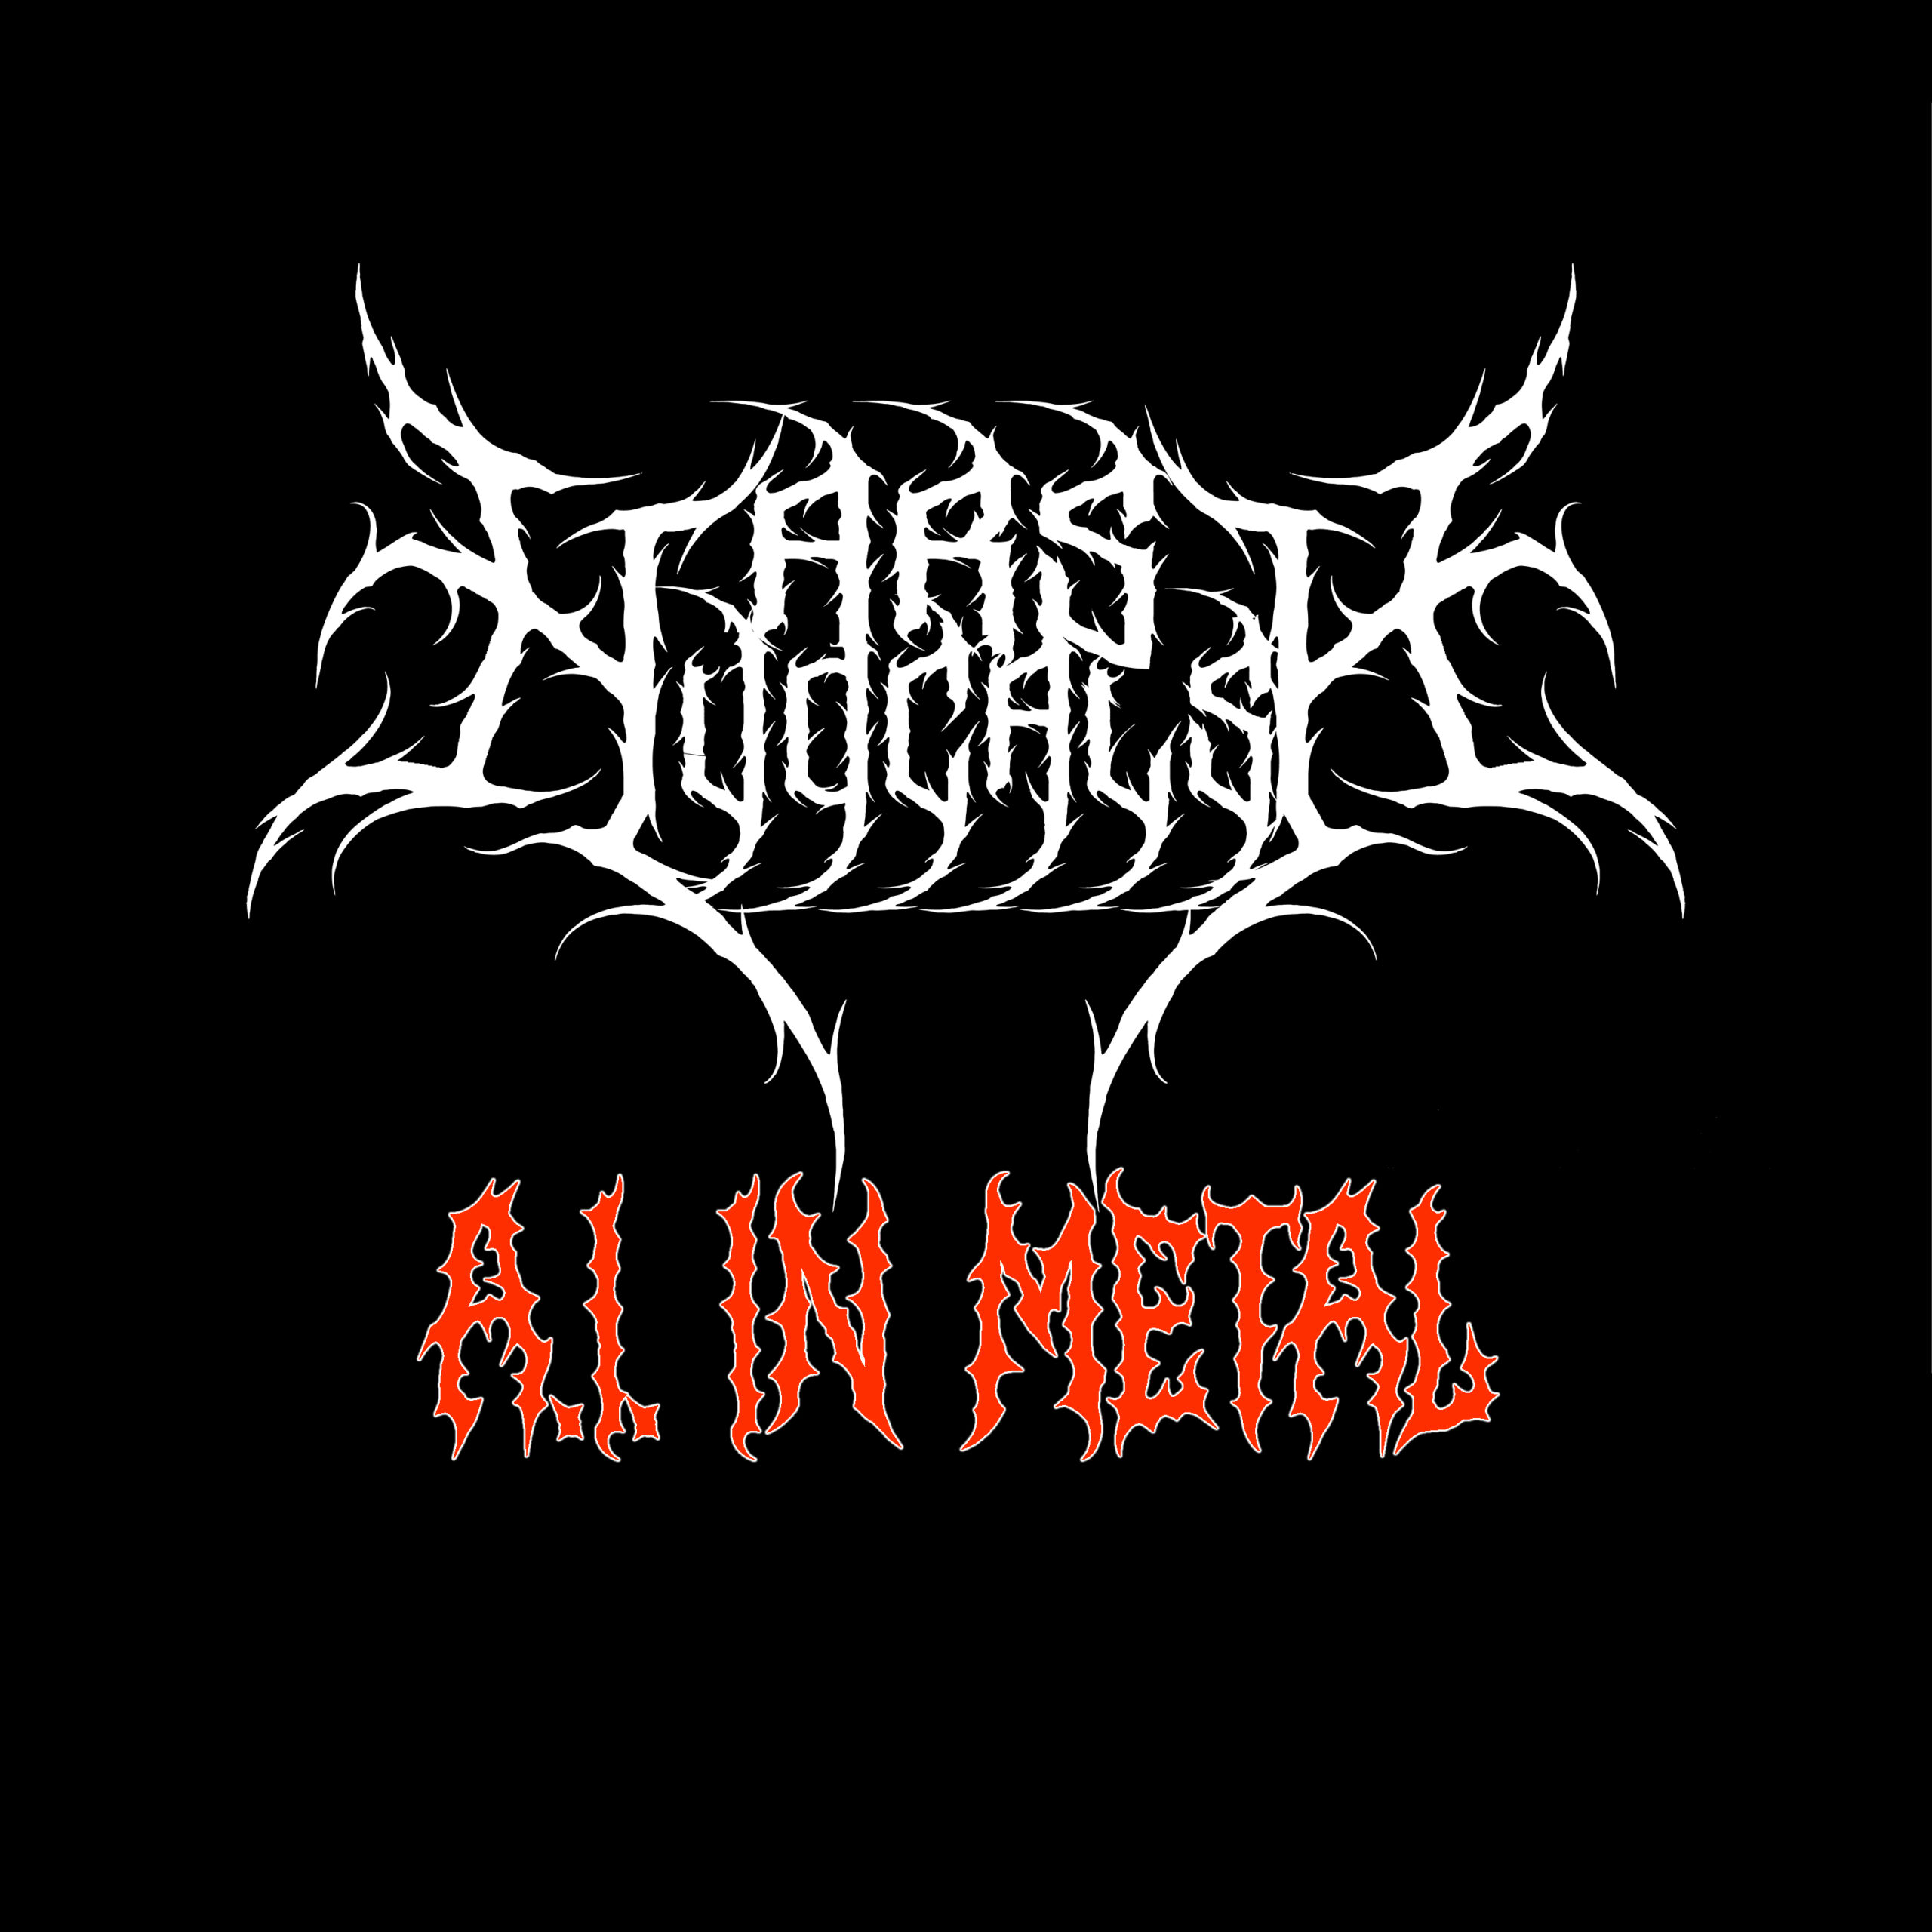 Harsh Vocals – Episode 04 – A.I. In Metal